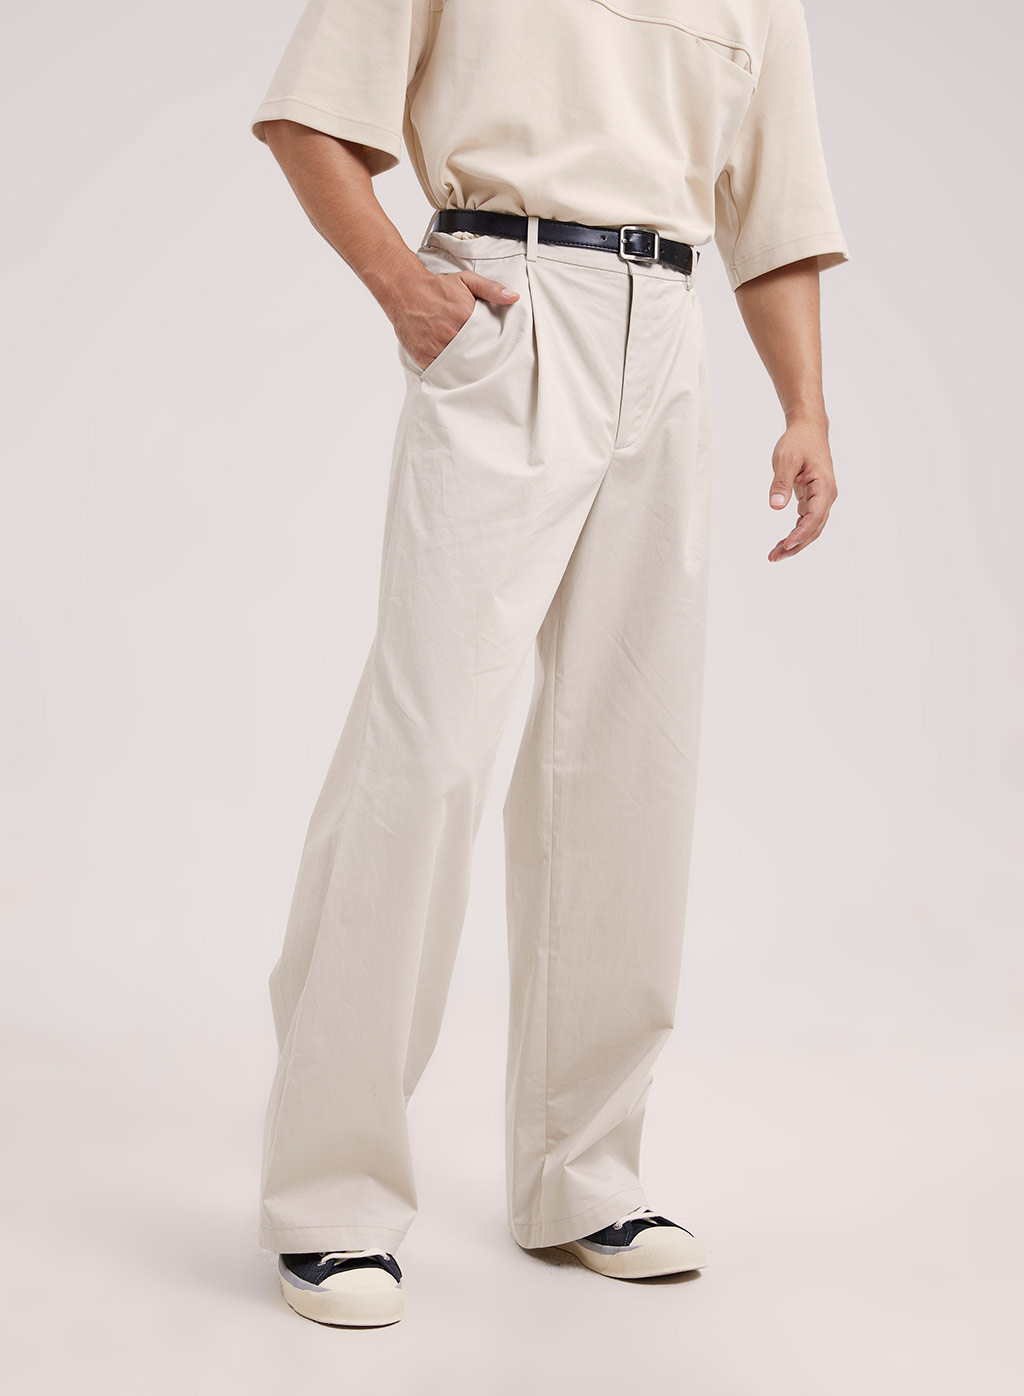 https://appapi.naploungewear.com/wp-content/uploads/2022/01/Loose-Fit-Cotton-Pants-Moon-White-1.jpg